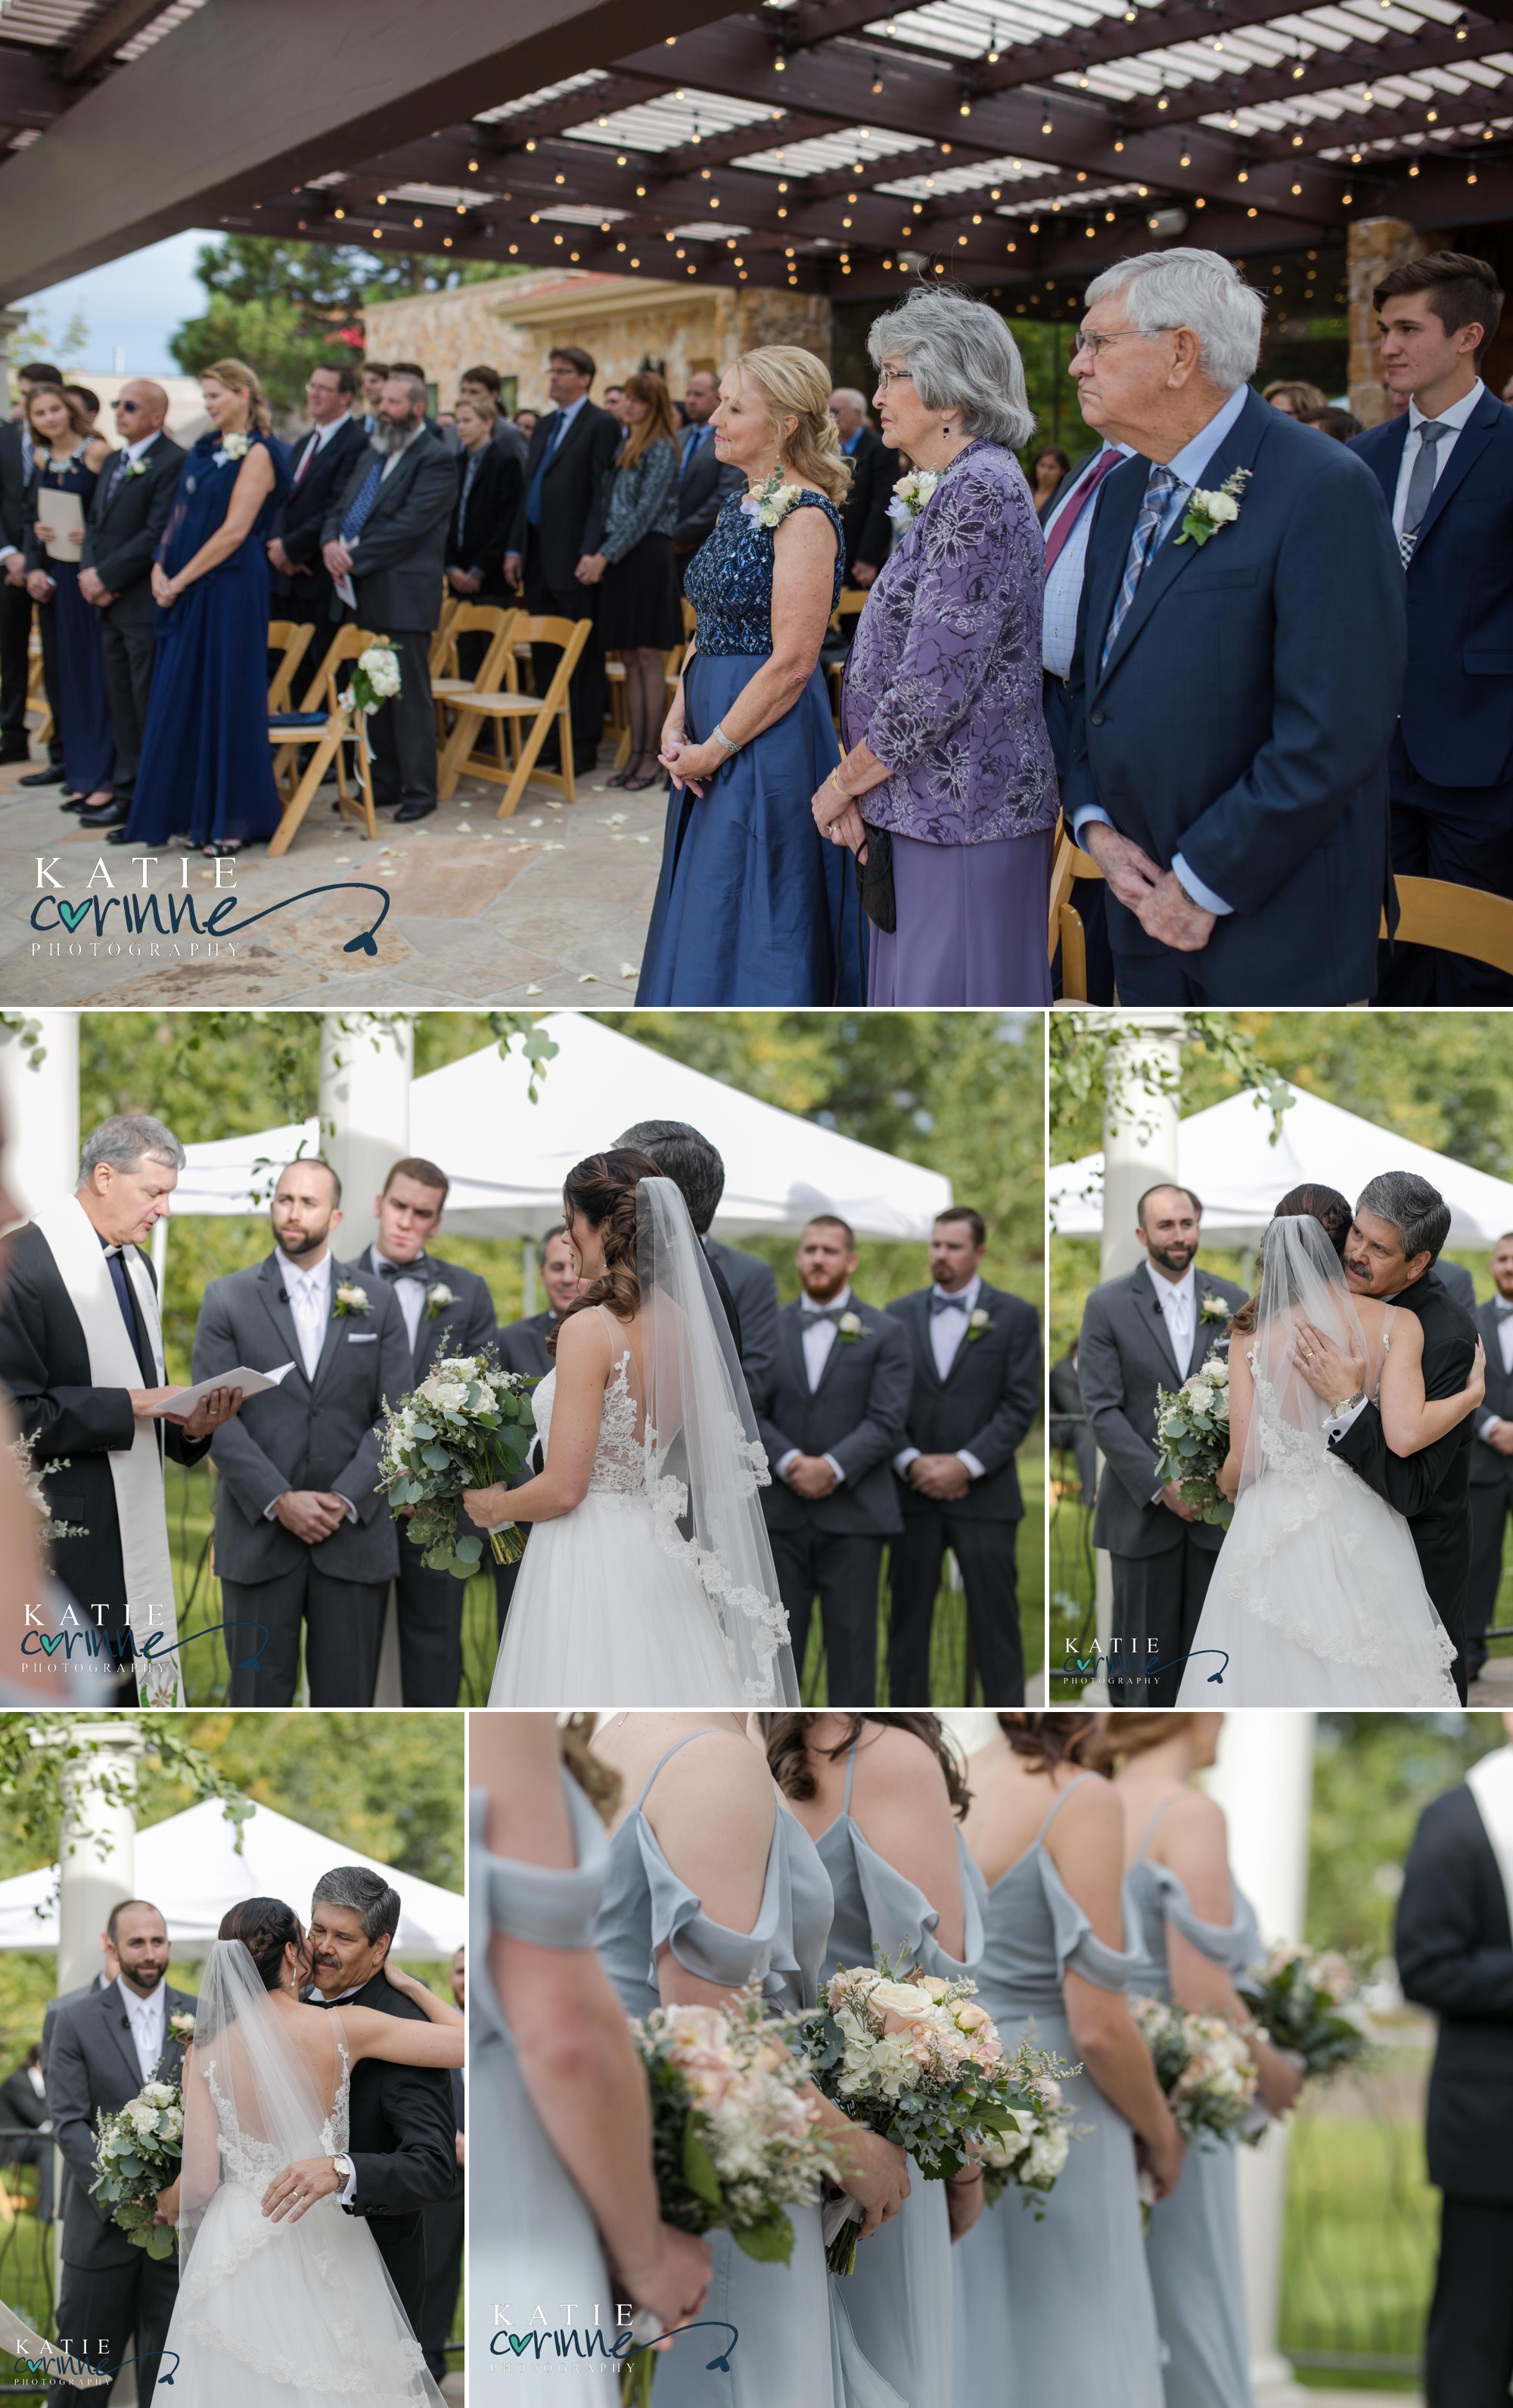 Emotional Wedding Photos